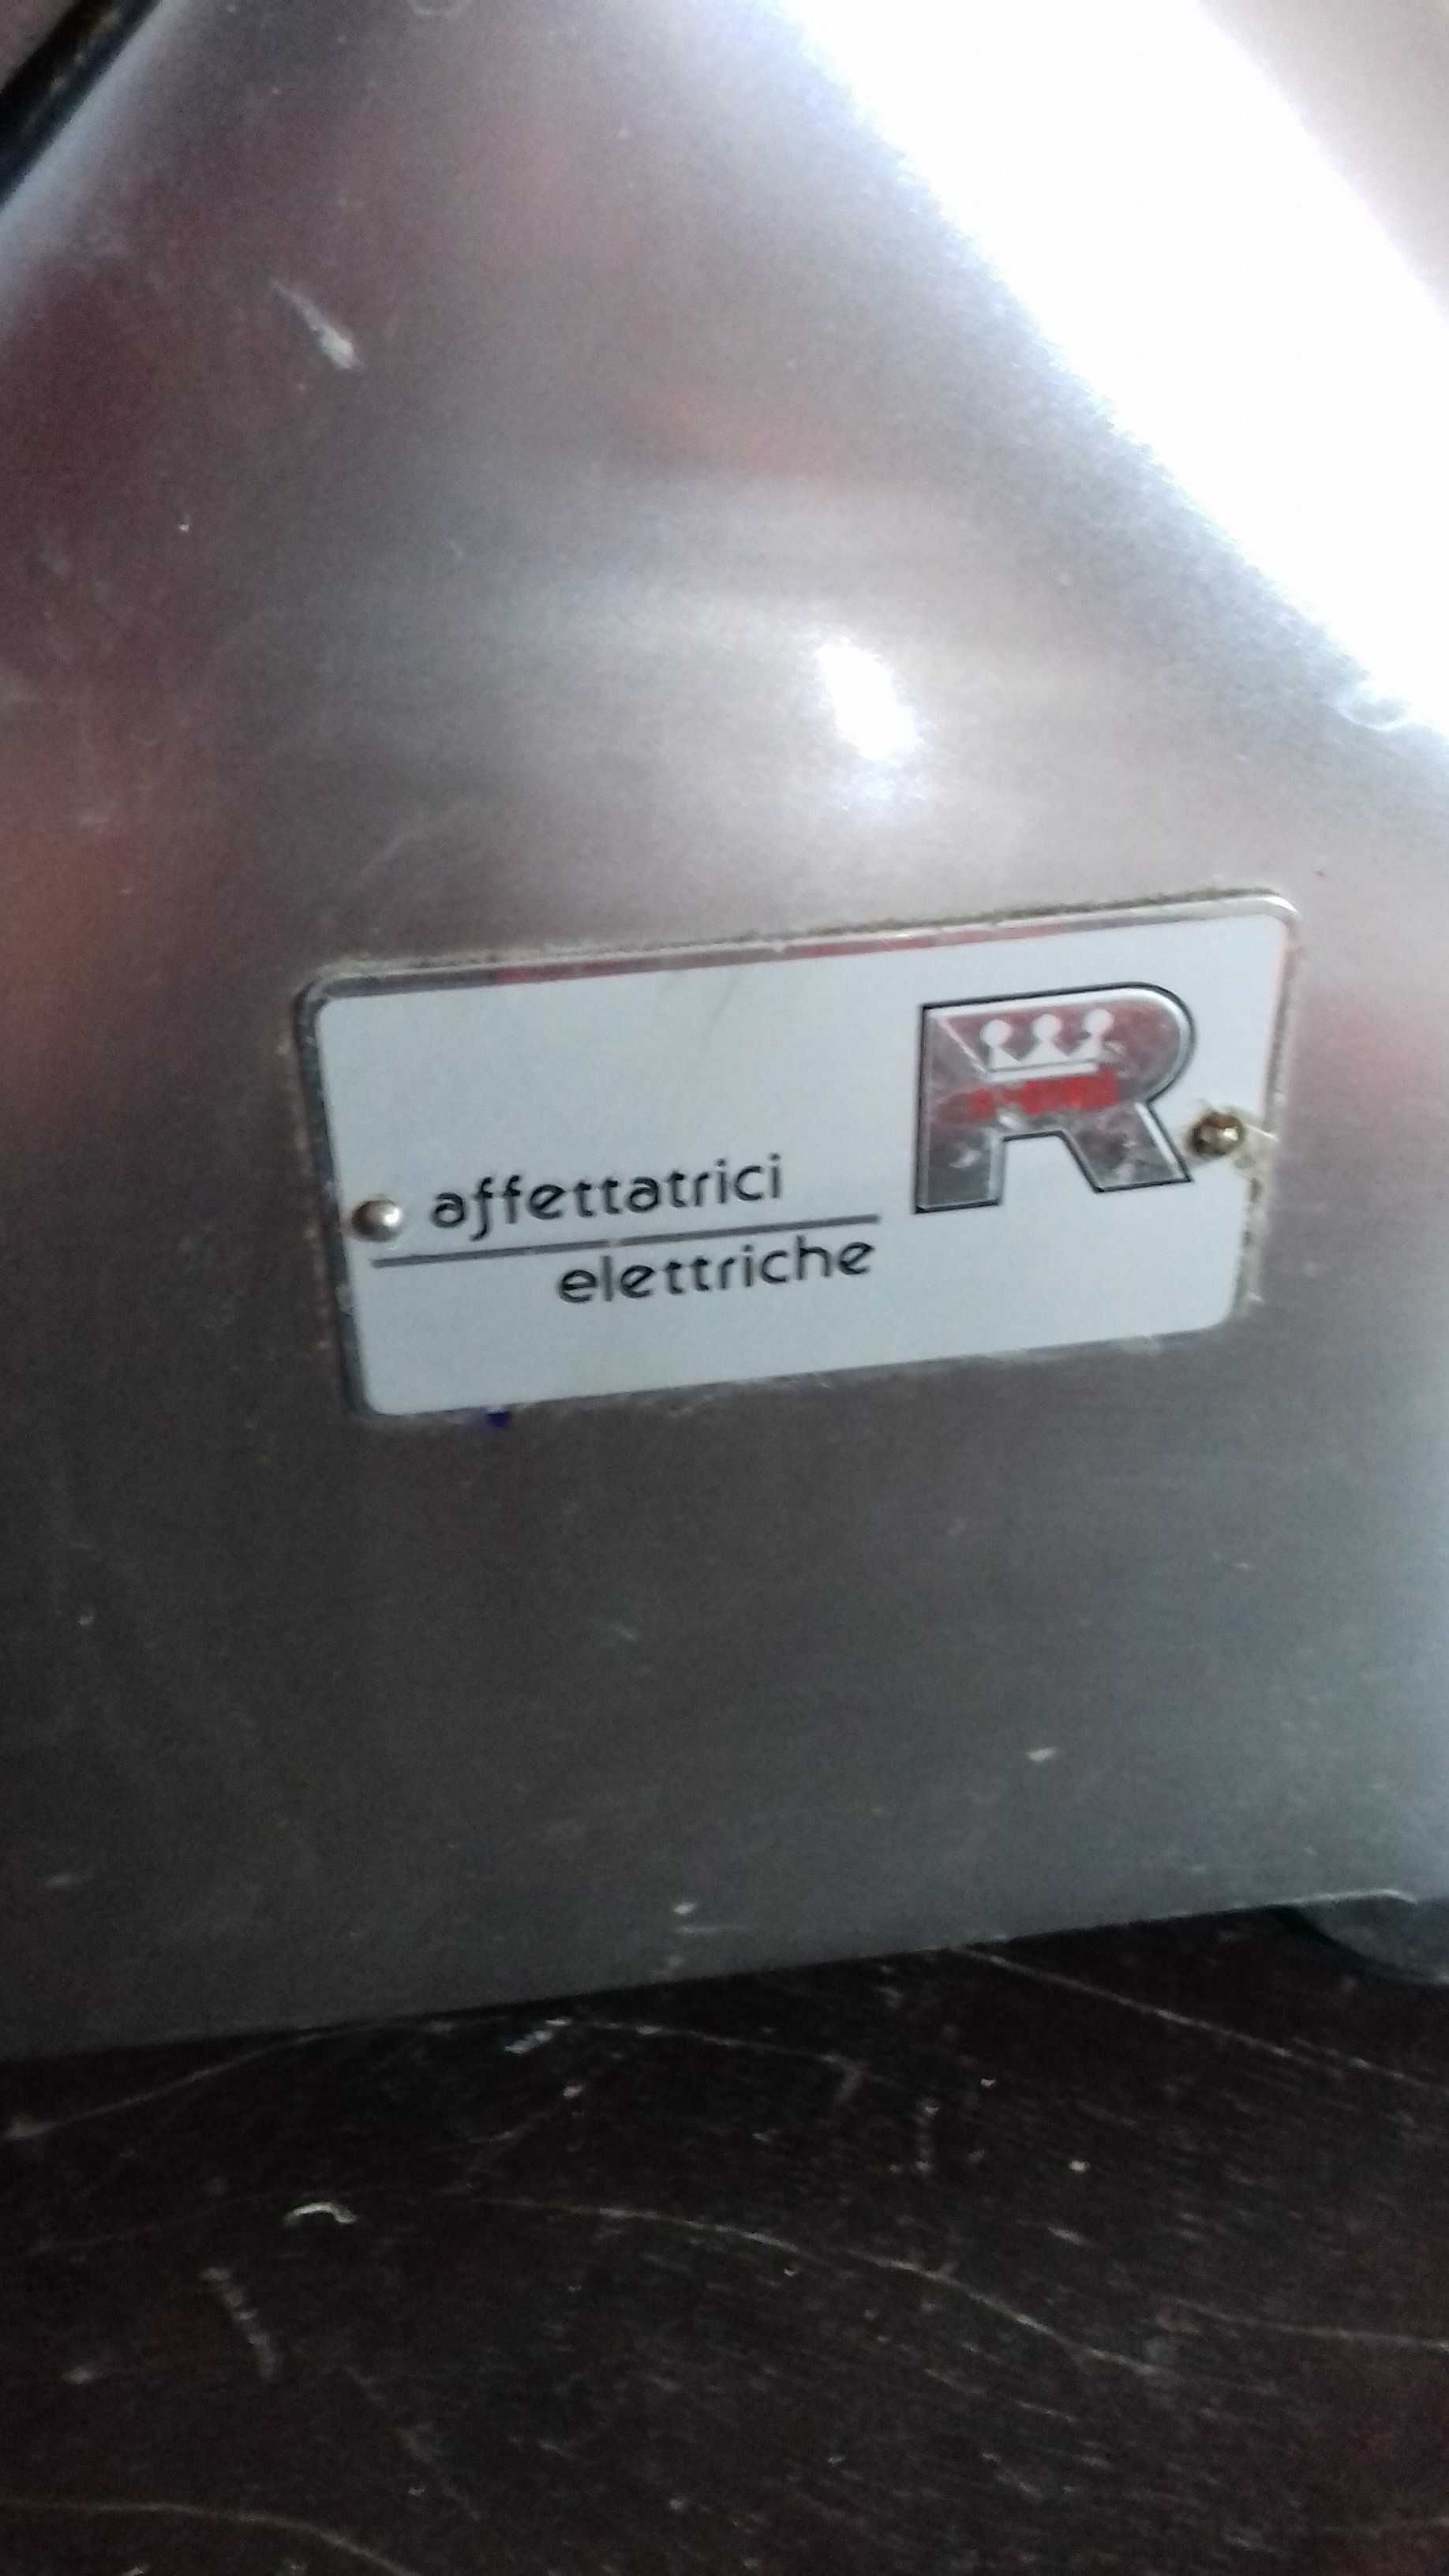 Fiambreira da marca registada Affettatrici elettriche R 250